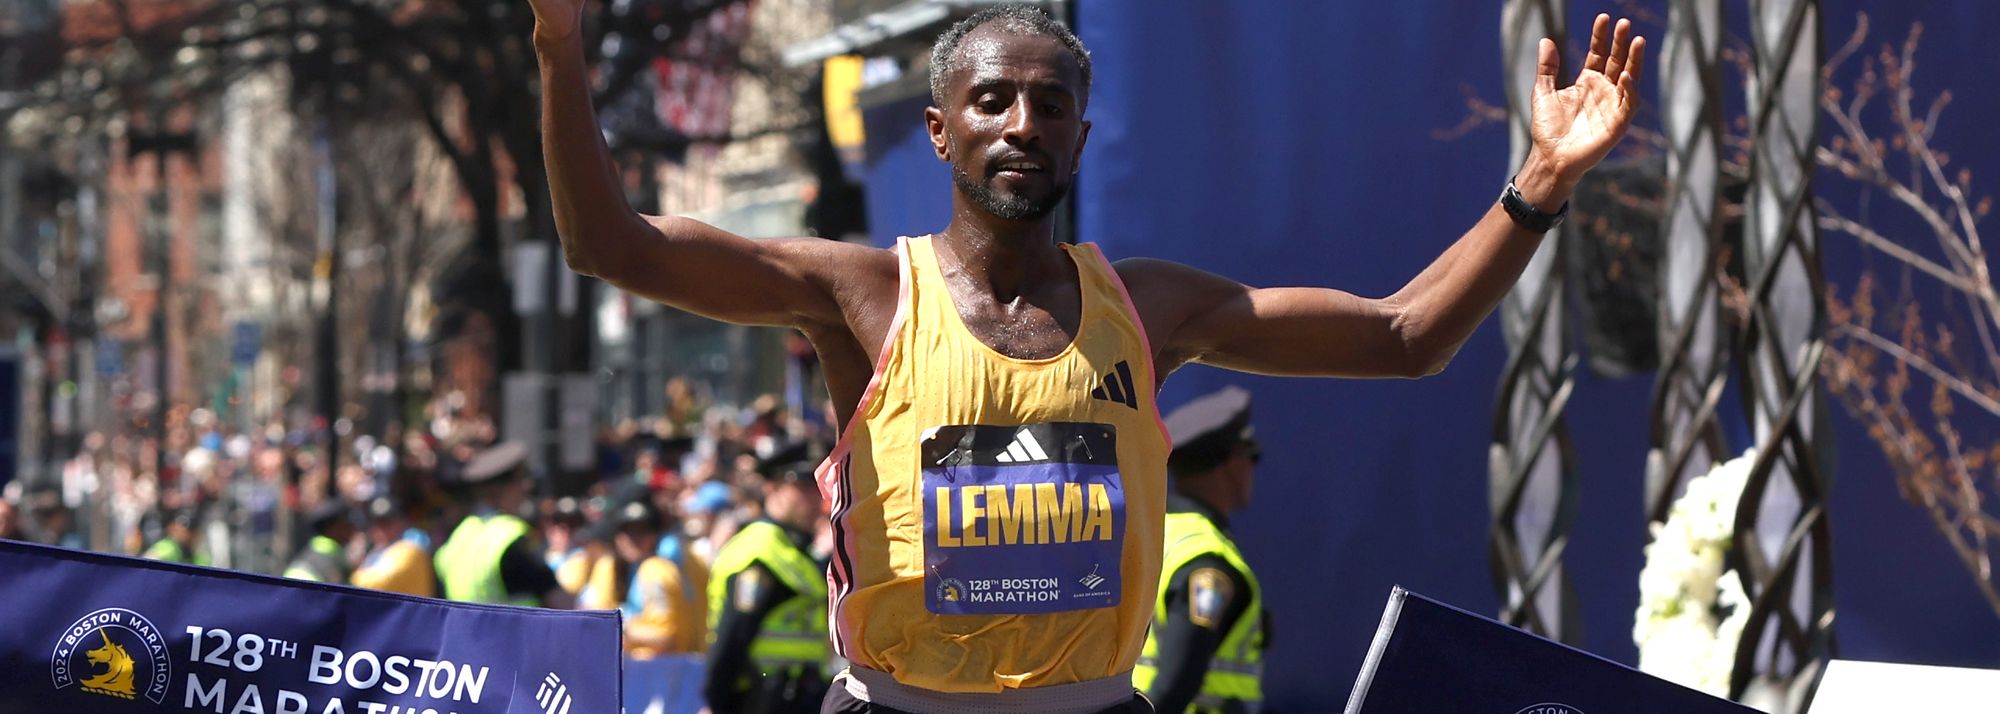 Ethiopia’s Sisay Lemma and Kenya’s Hellen Obiri were victorious at the Boston Marathon